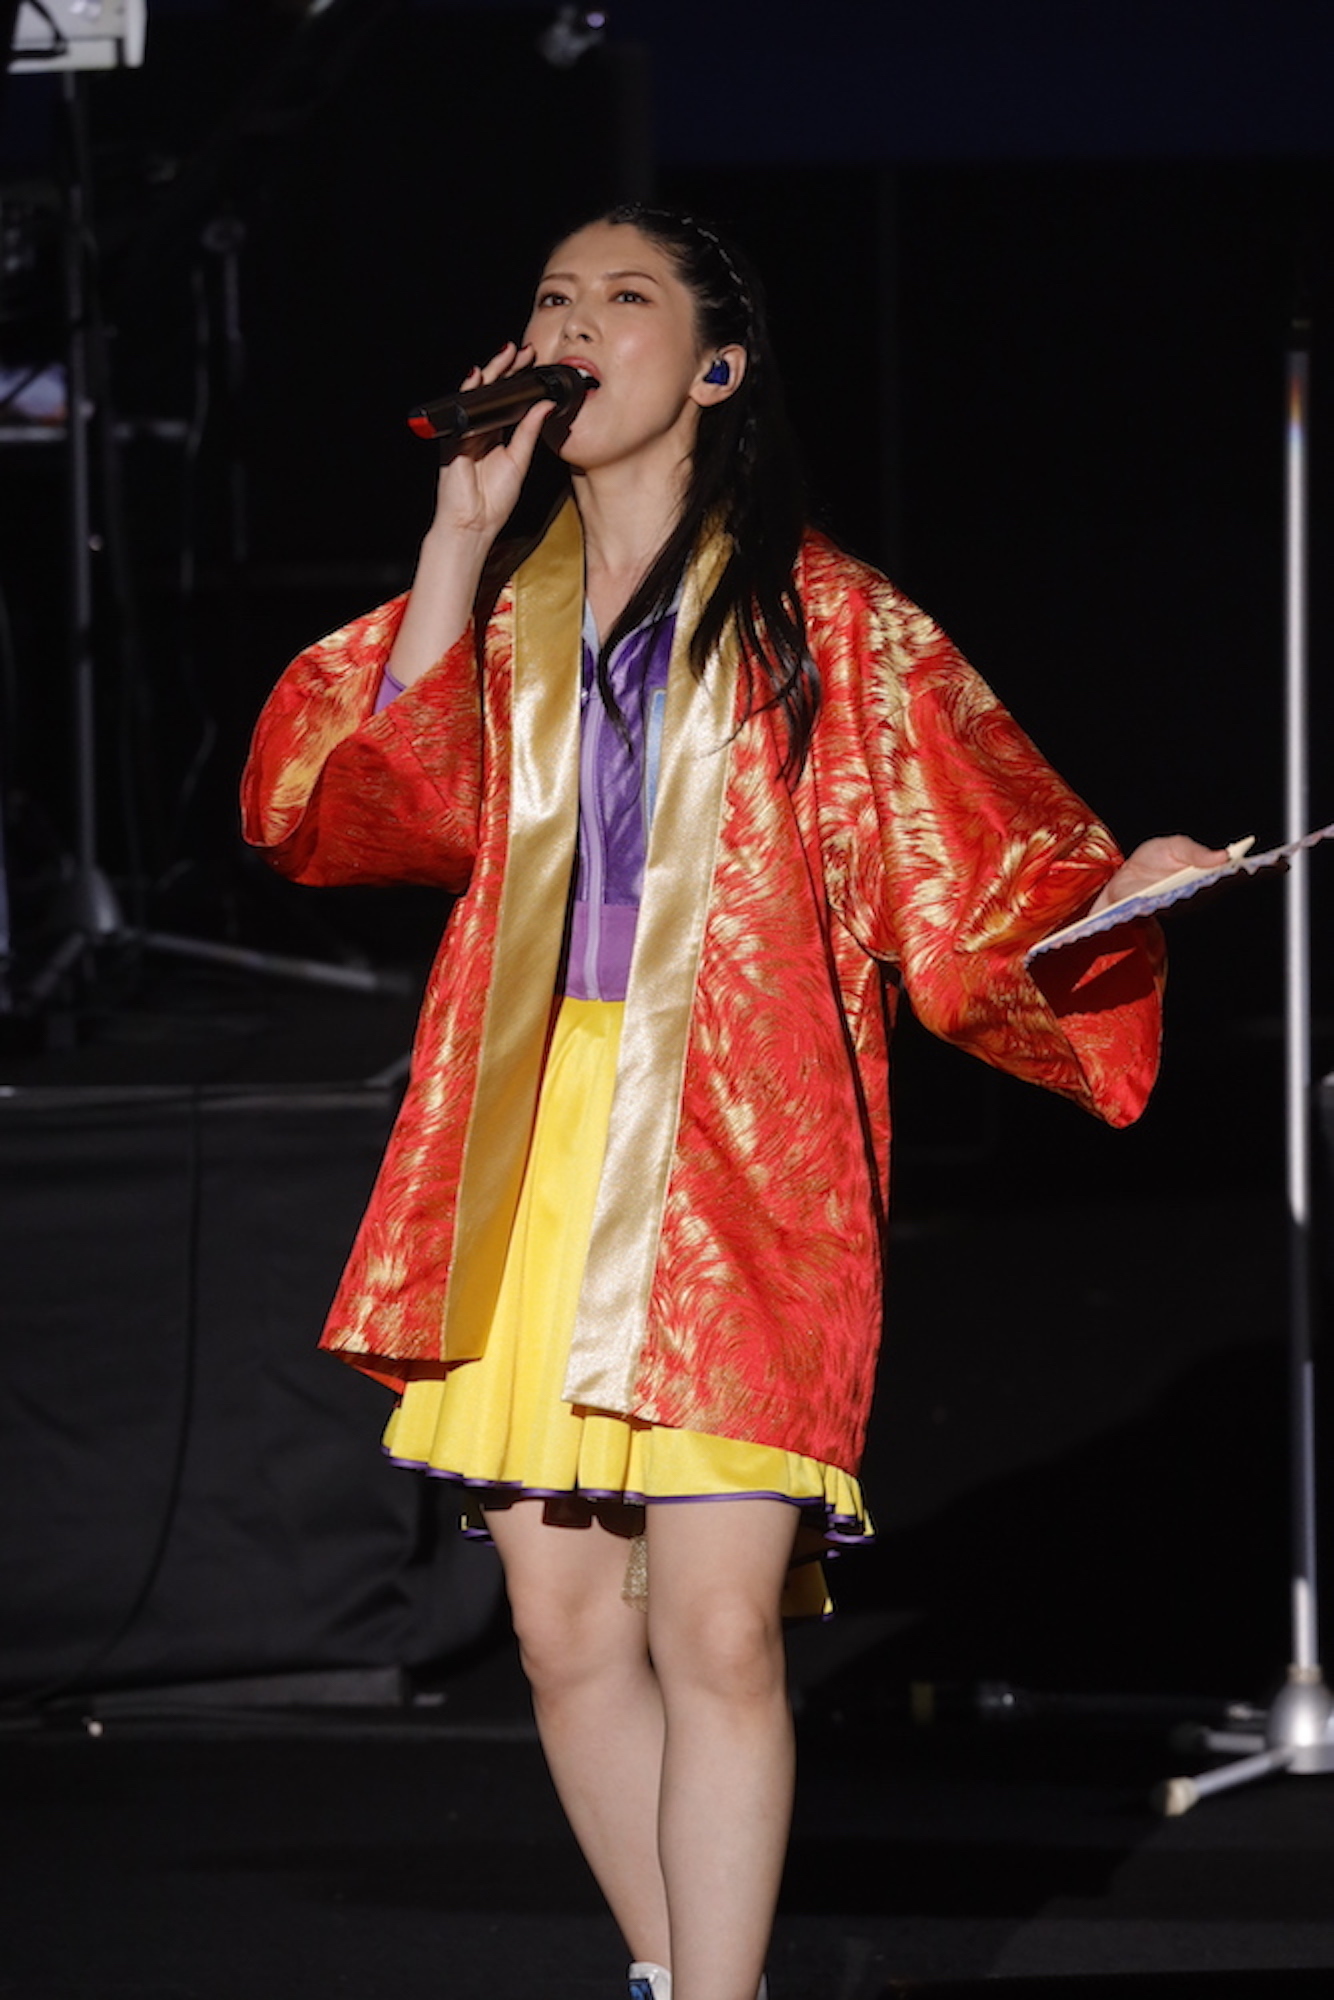 『SUMMER CHAMPION2019〜Minori Chihara 11th Summer Live〜』photo by 草刈雅之